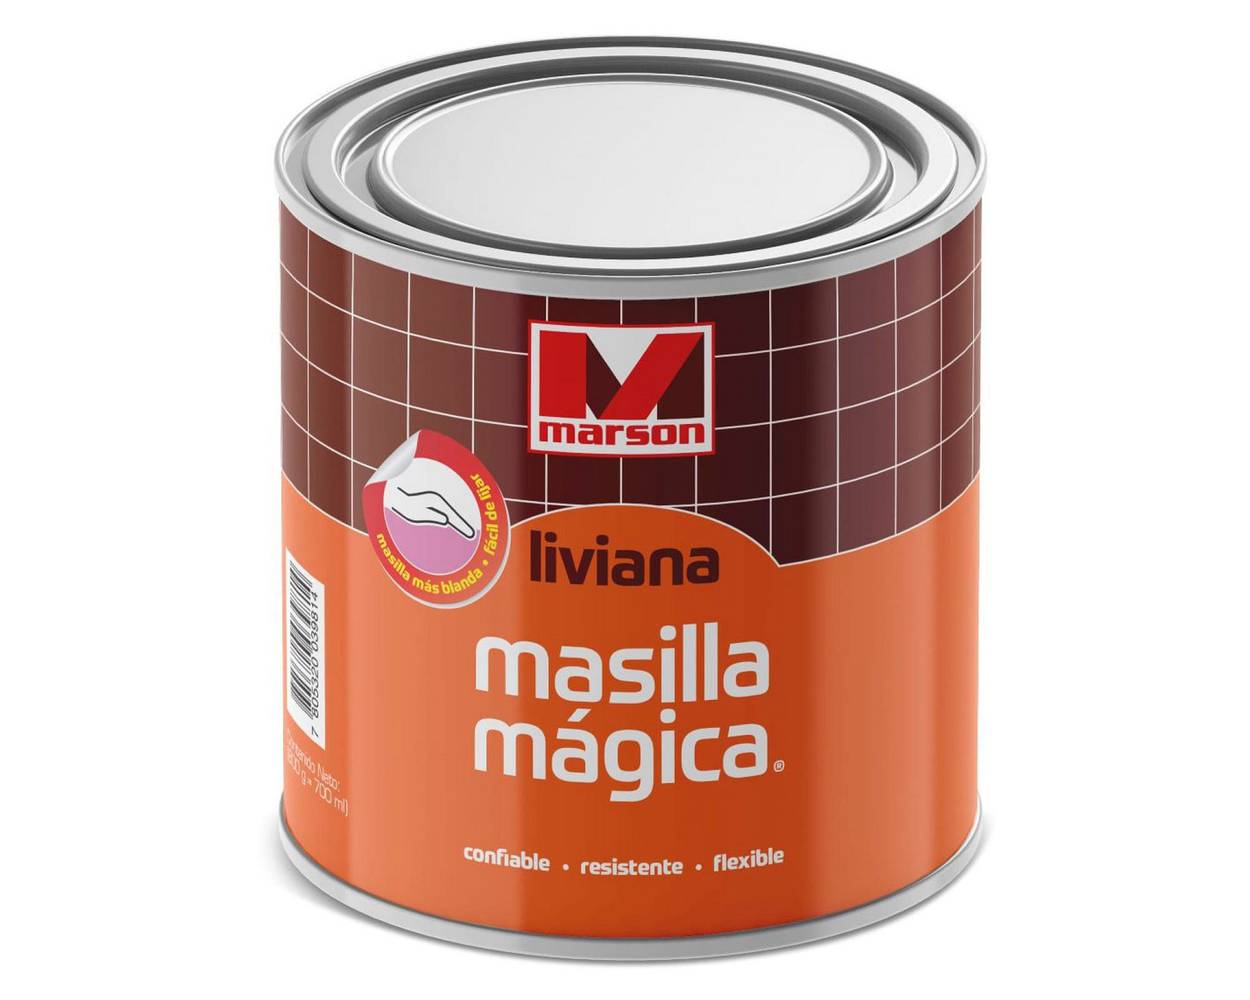 Marson masilla magica liviana (requiere endurecedor) (700 ml)